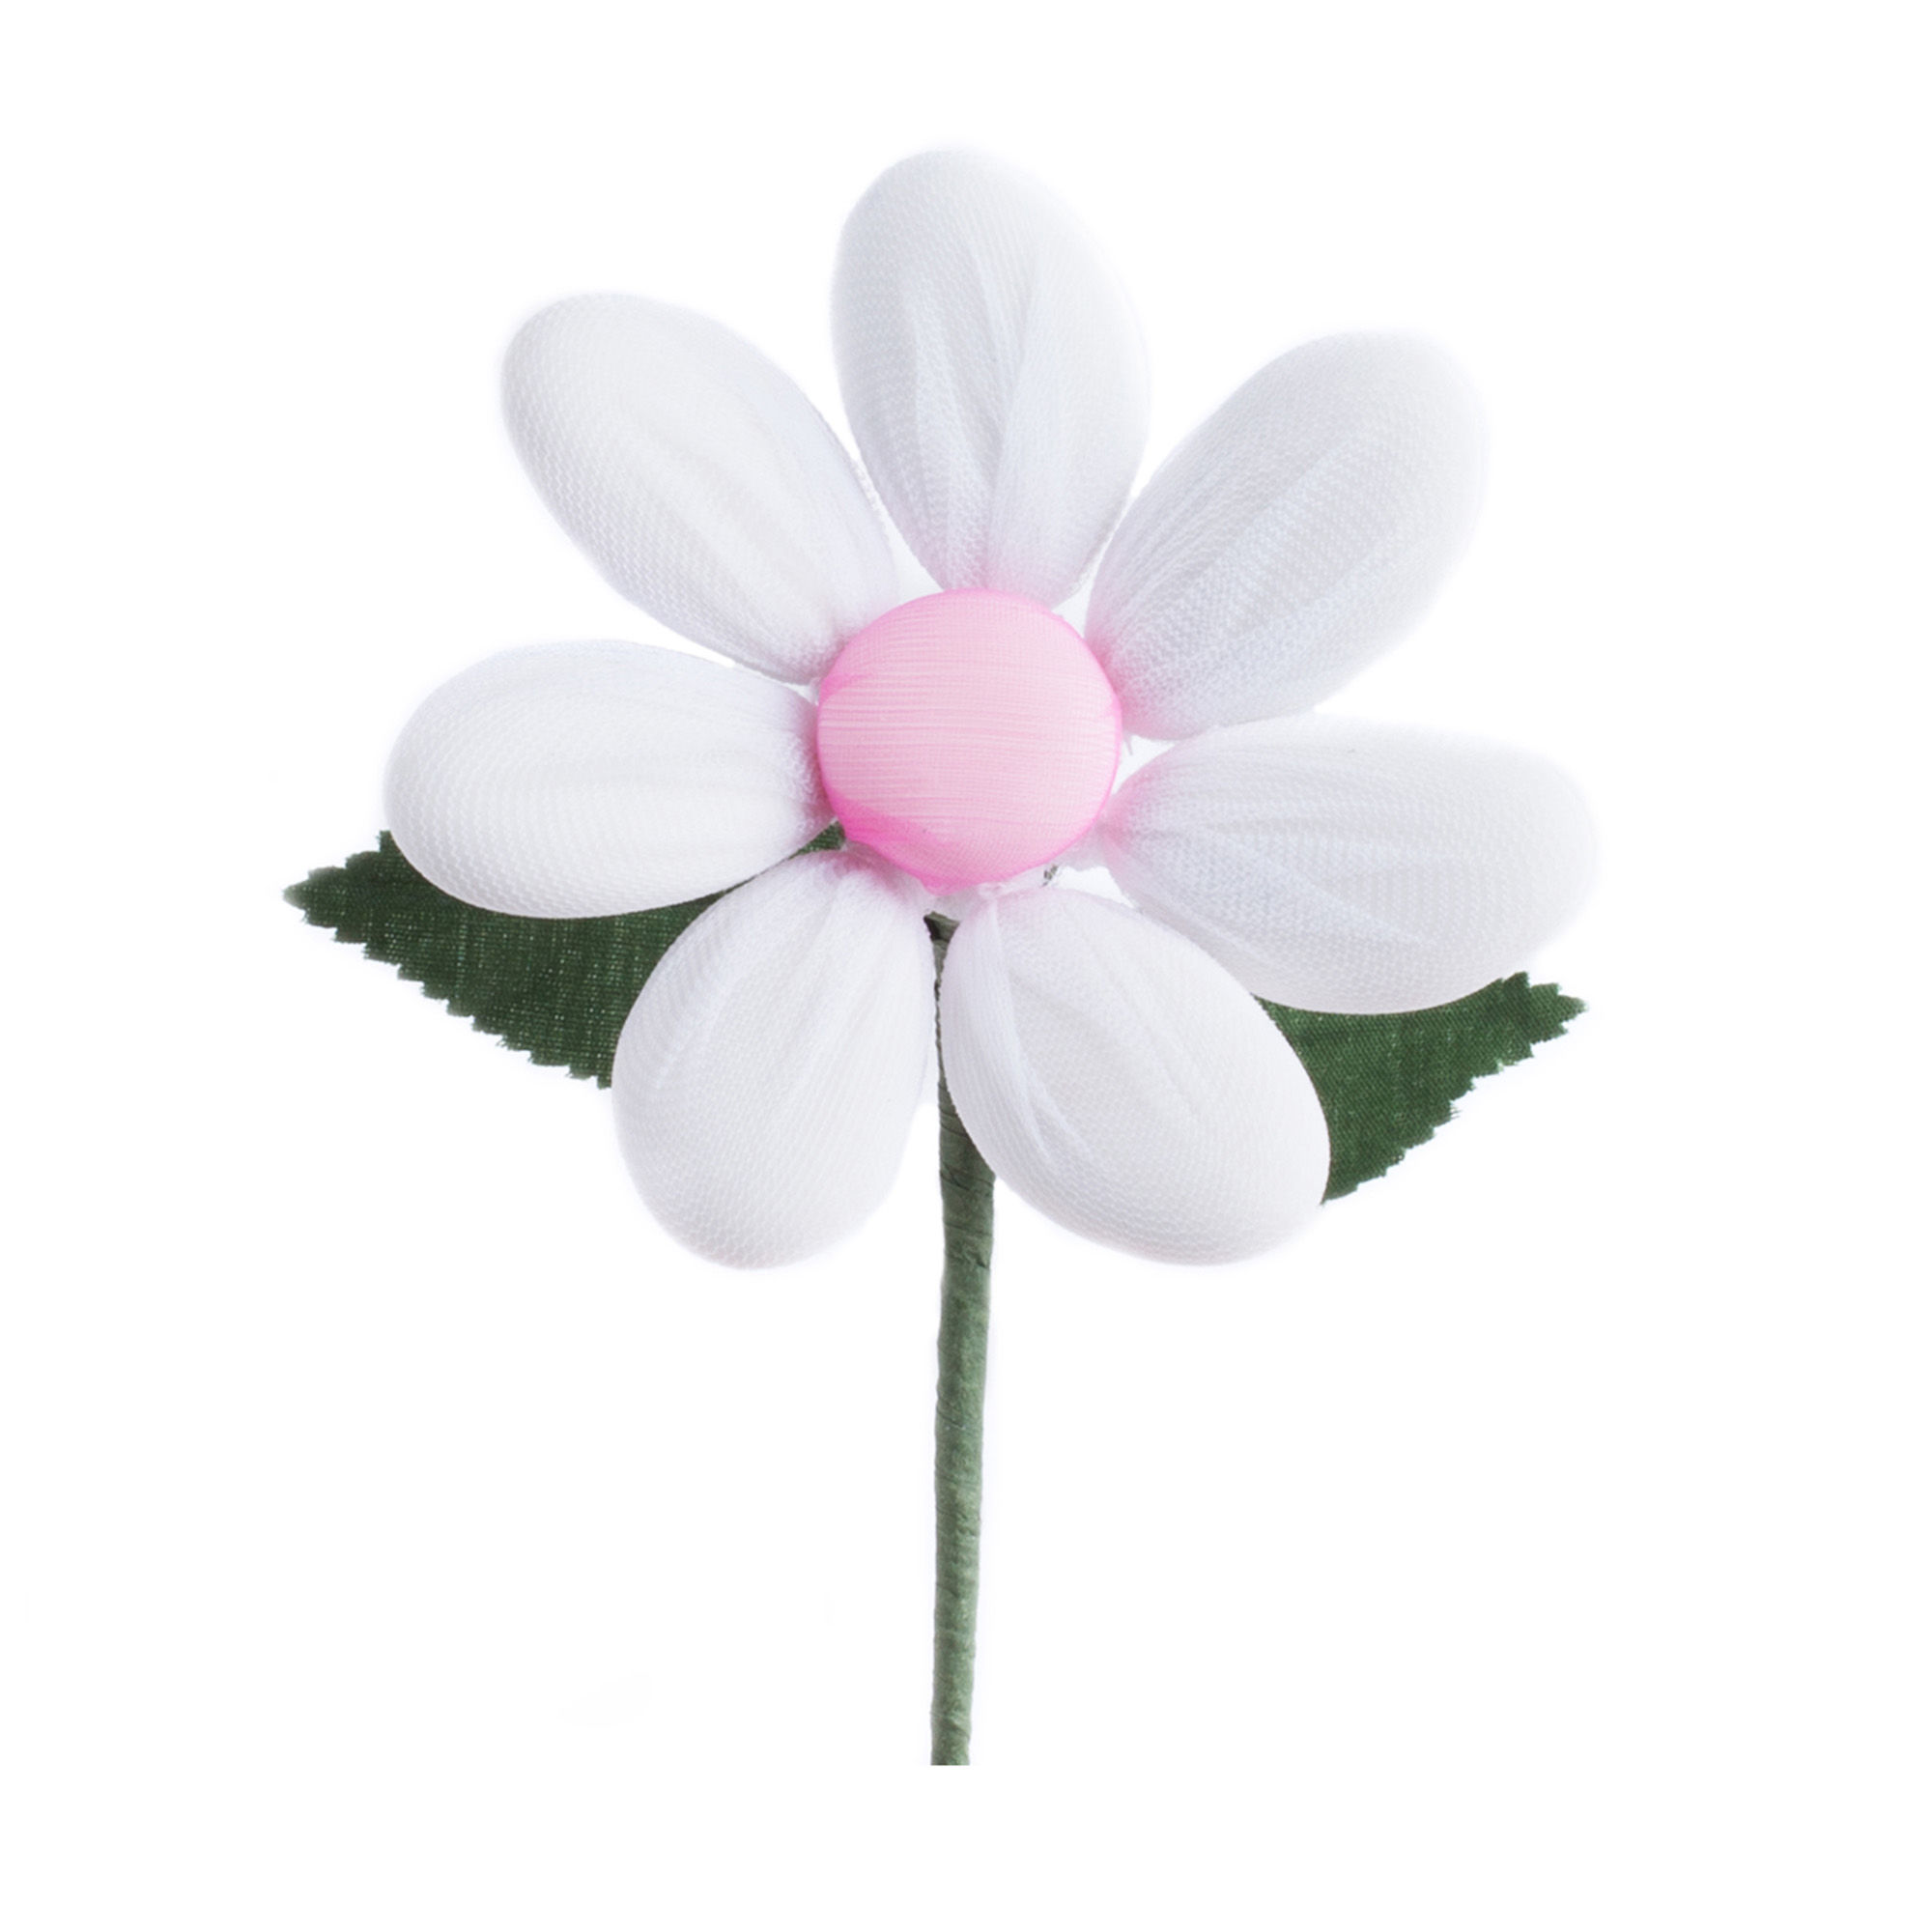 White Daisy Candy Flowers - Dark Chocolate | Sugarfina | A Luxury ...